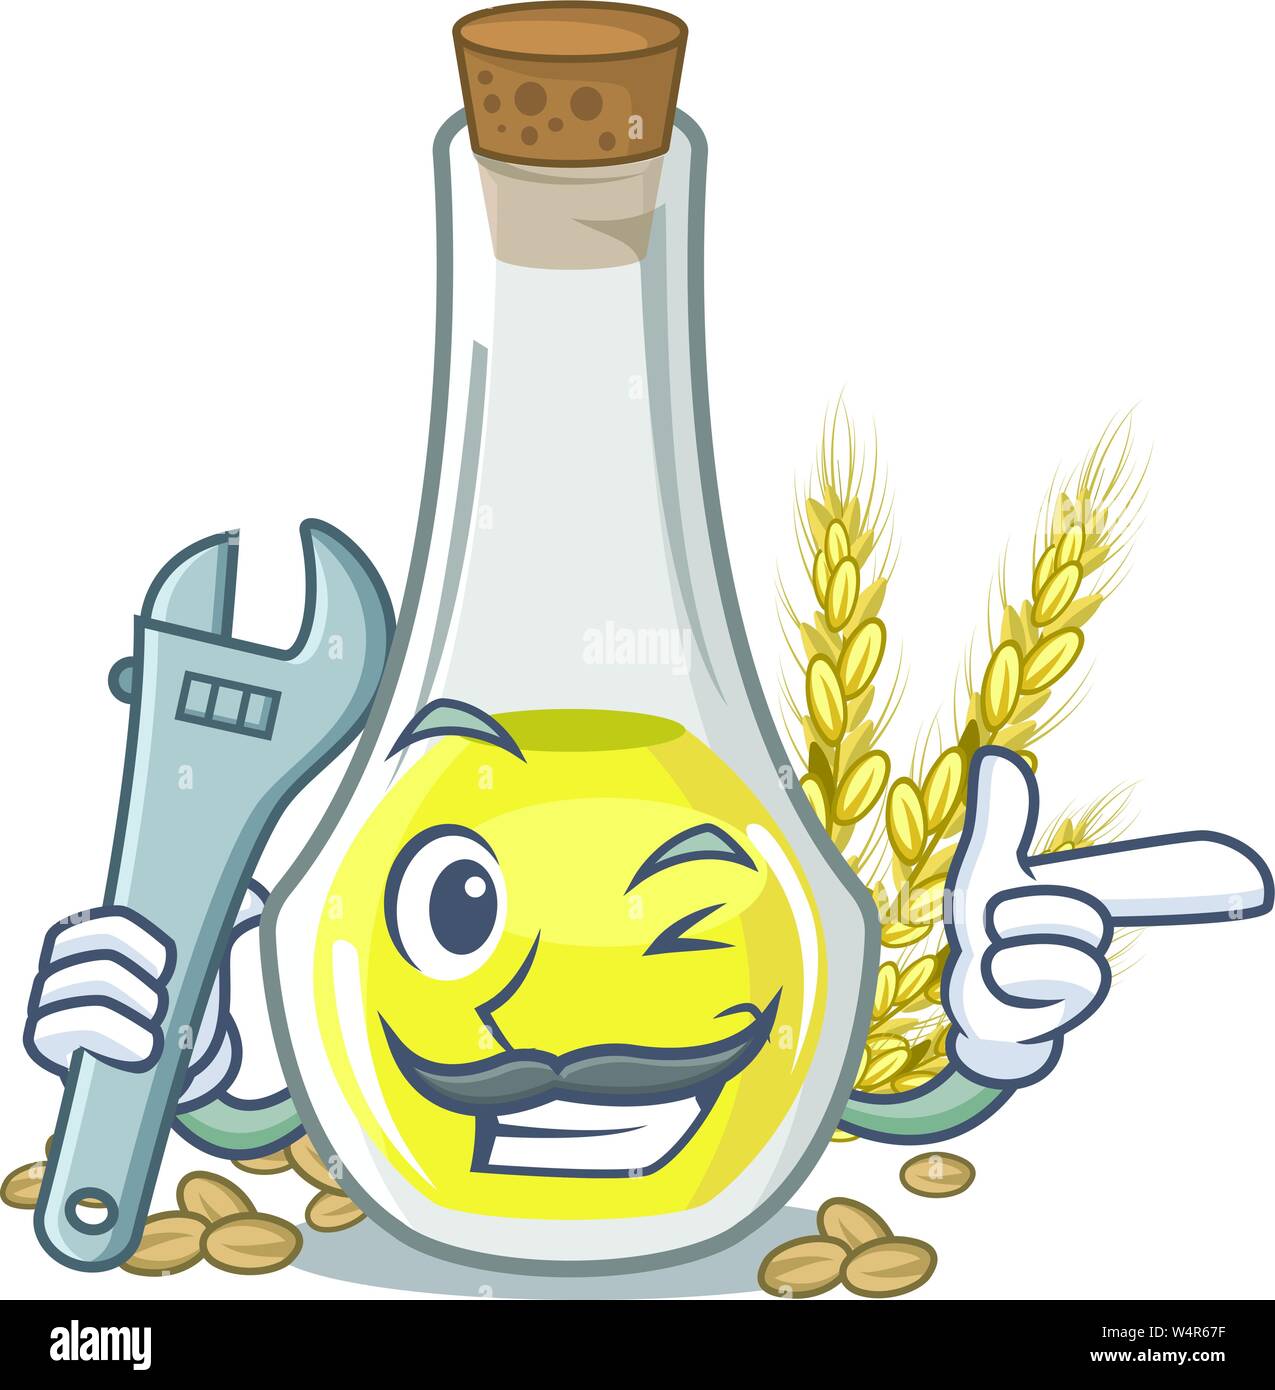 Mechanic wheat germ oil at cartoon table vector illustration Stock Vector